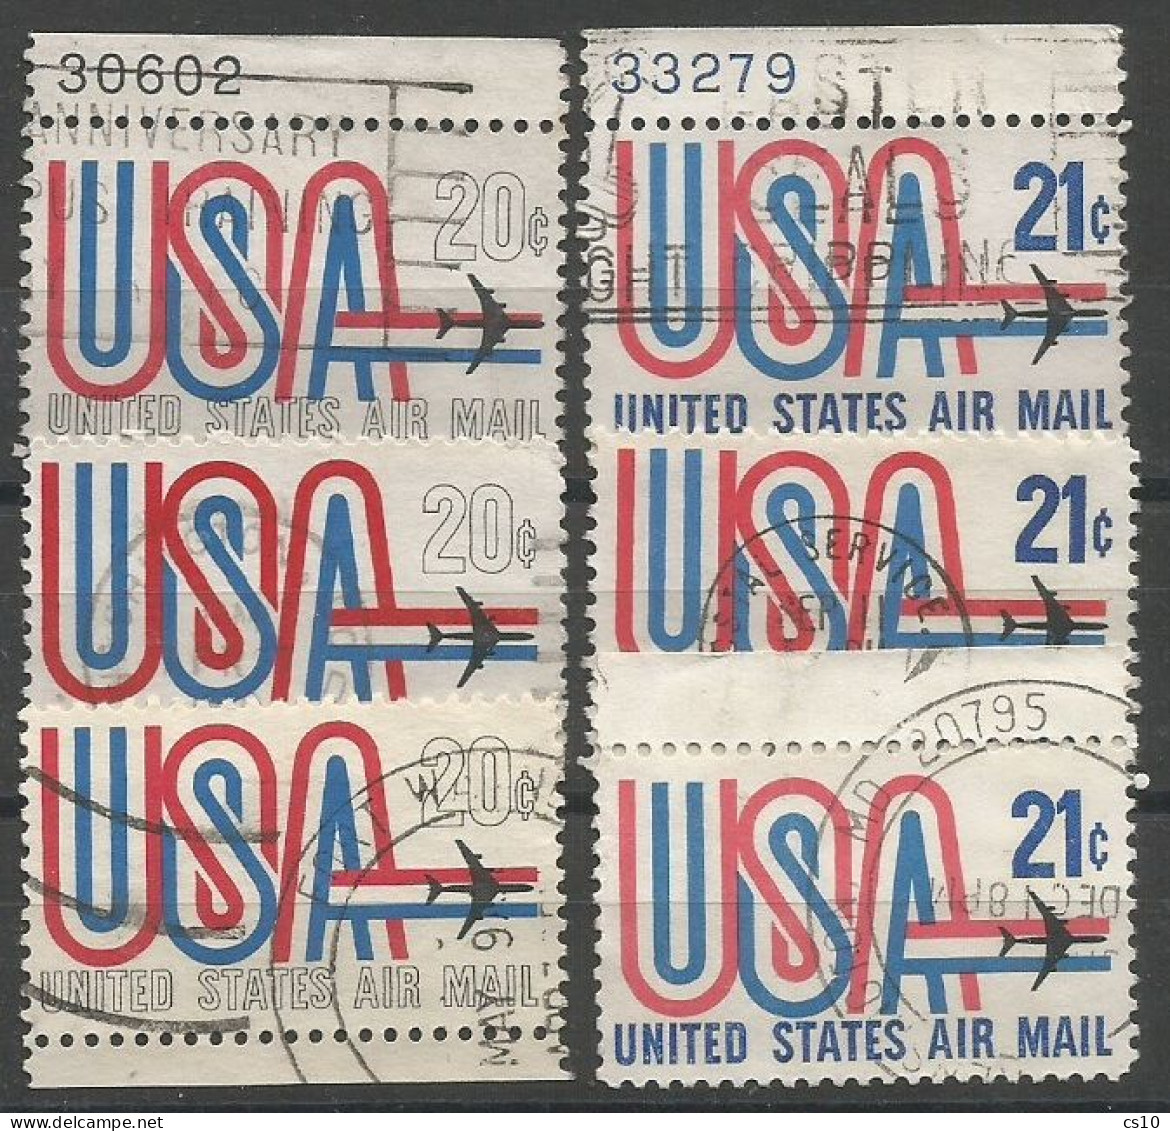 USA Ribbon Airmail 1968/73 SC.# C75+C81 . #2 With Plate  Number + # VFU Circular PMk + #2 Sheet Margin - Numéros De Planches